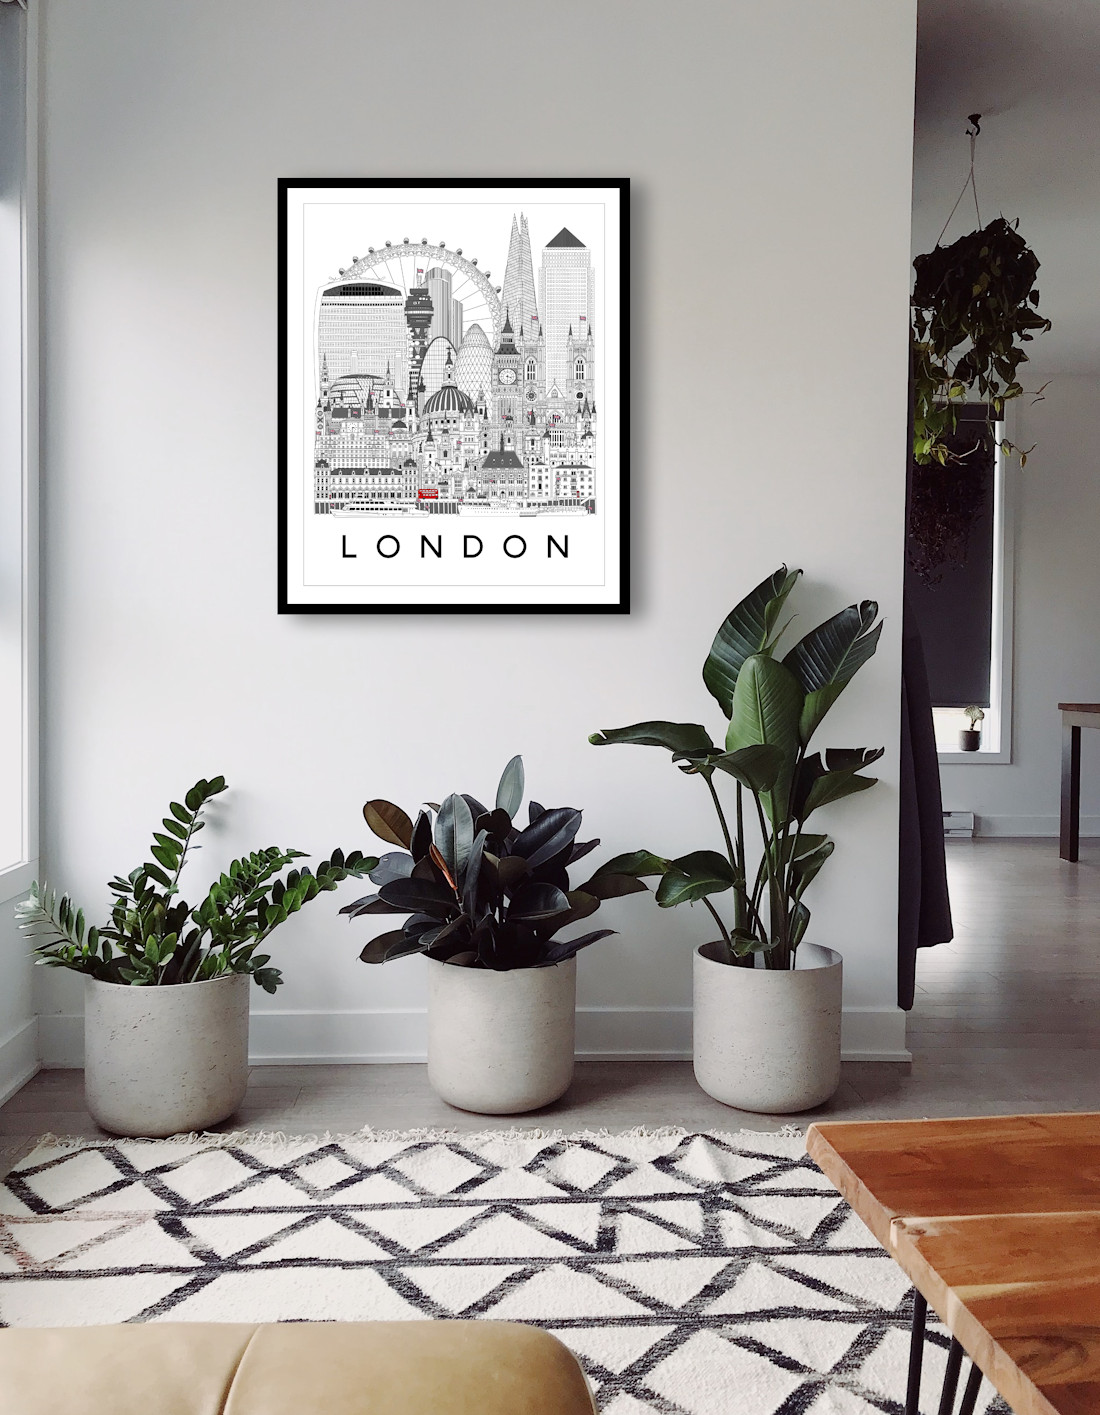 London art print